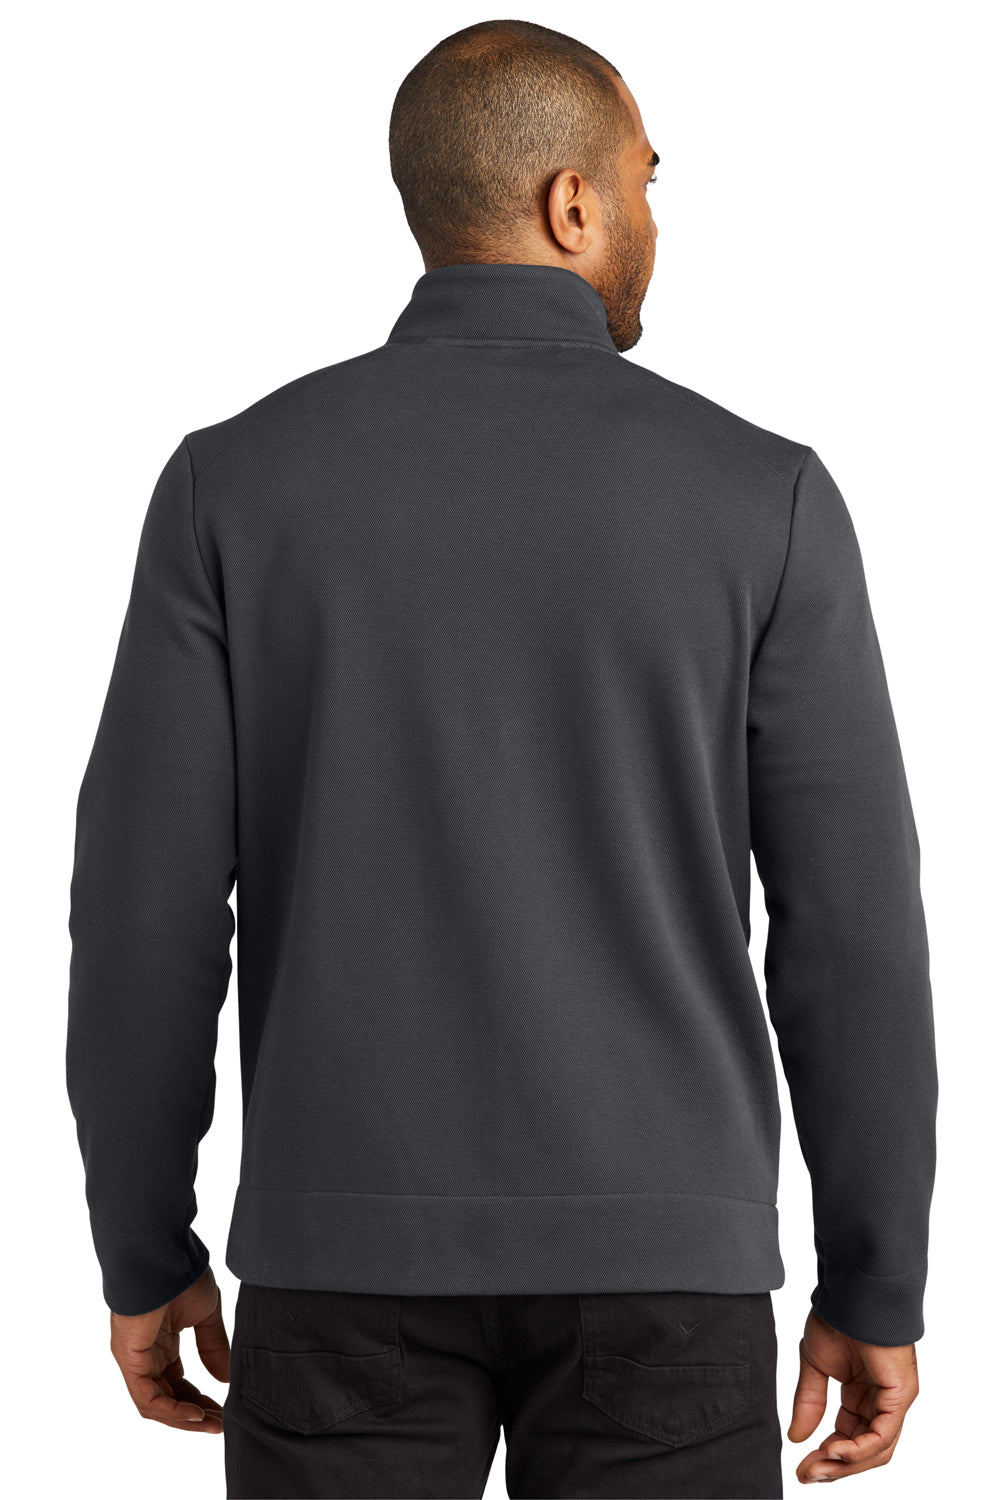 Port Authority F422 Mens Network Fleece Full Zip Jacket Charcoal Grey Back